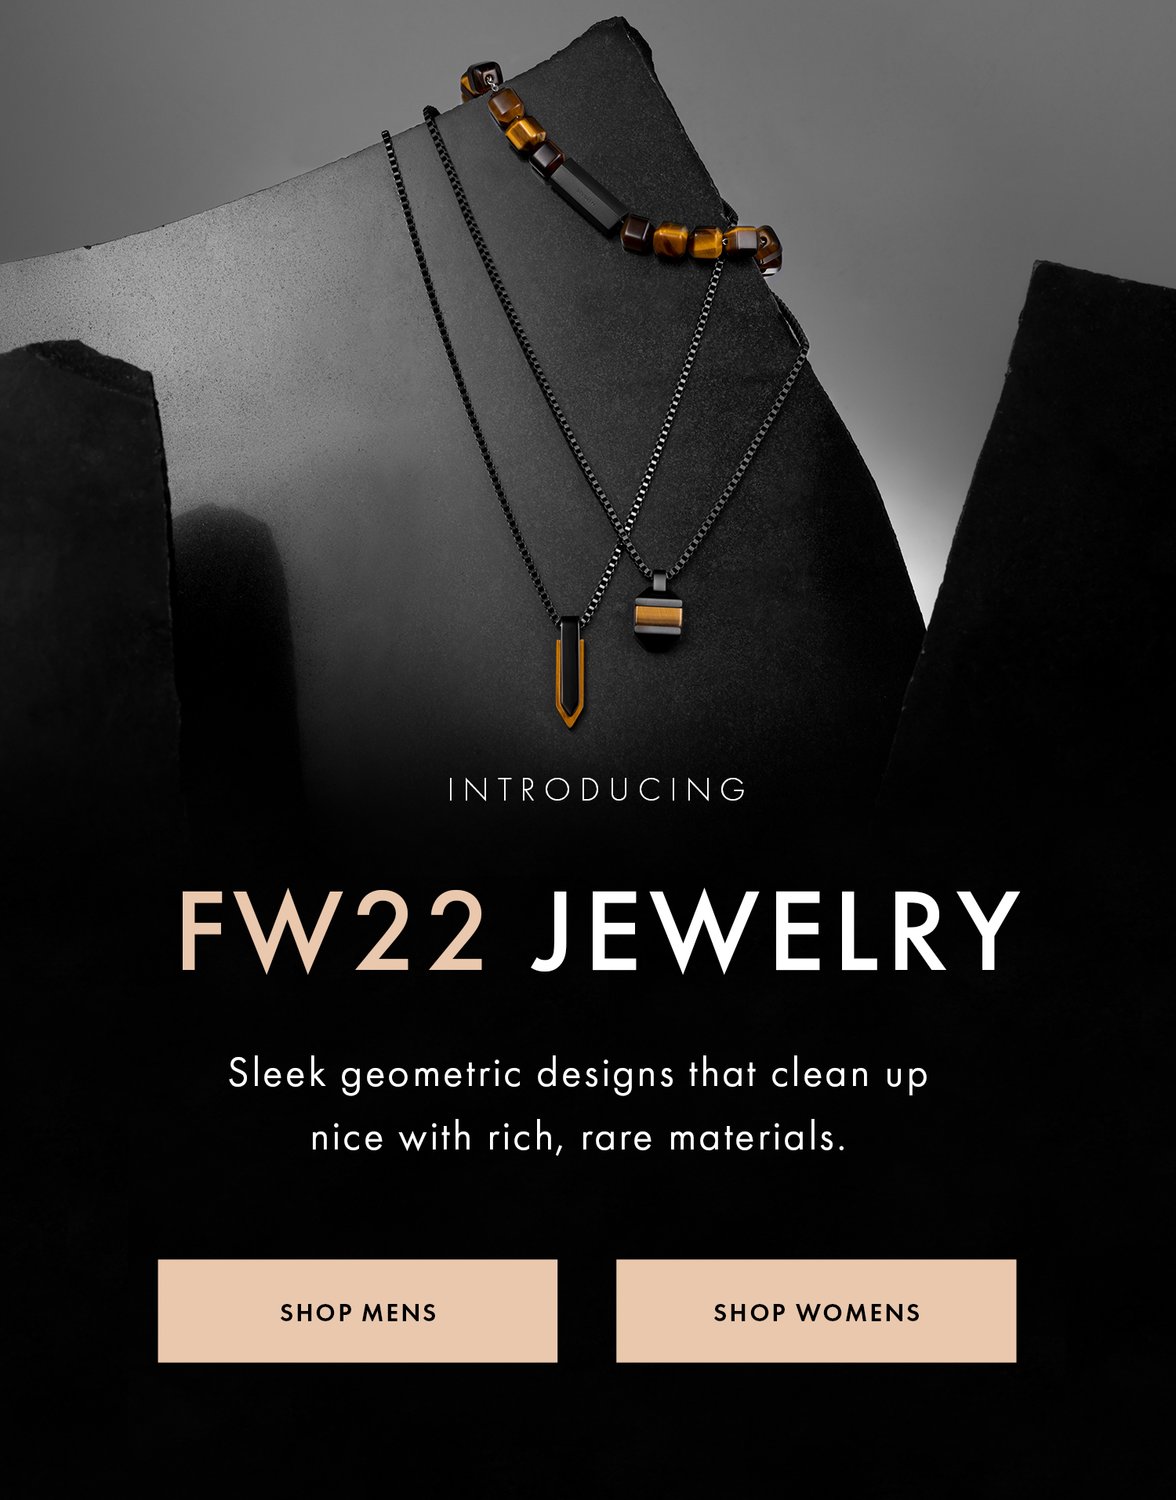 FW22 Jewelry